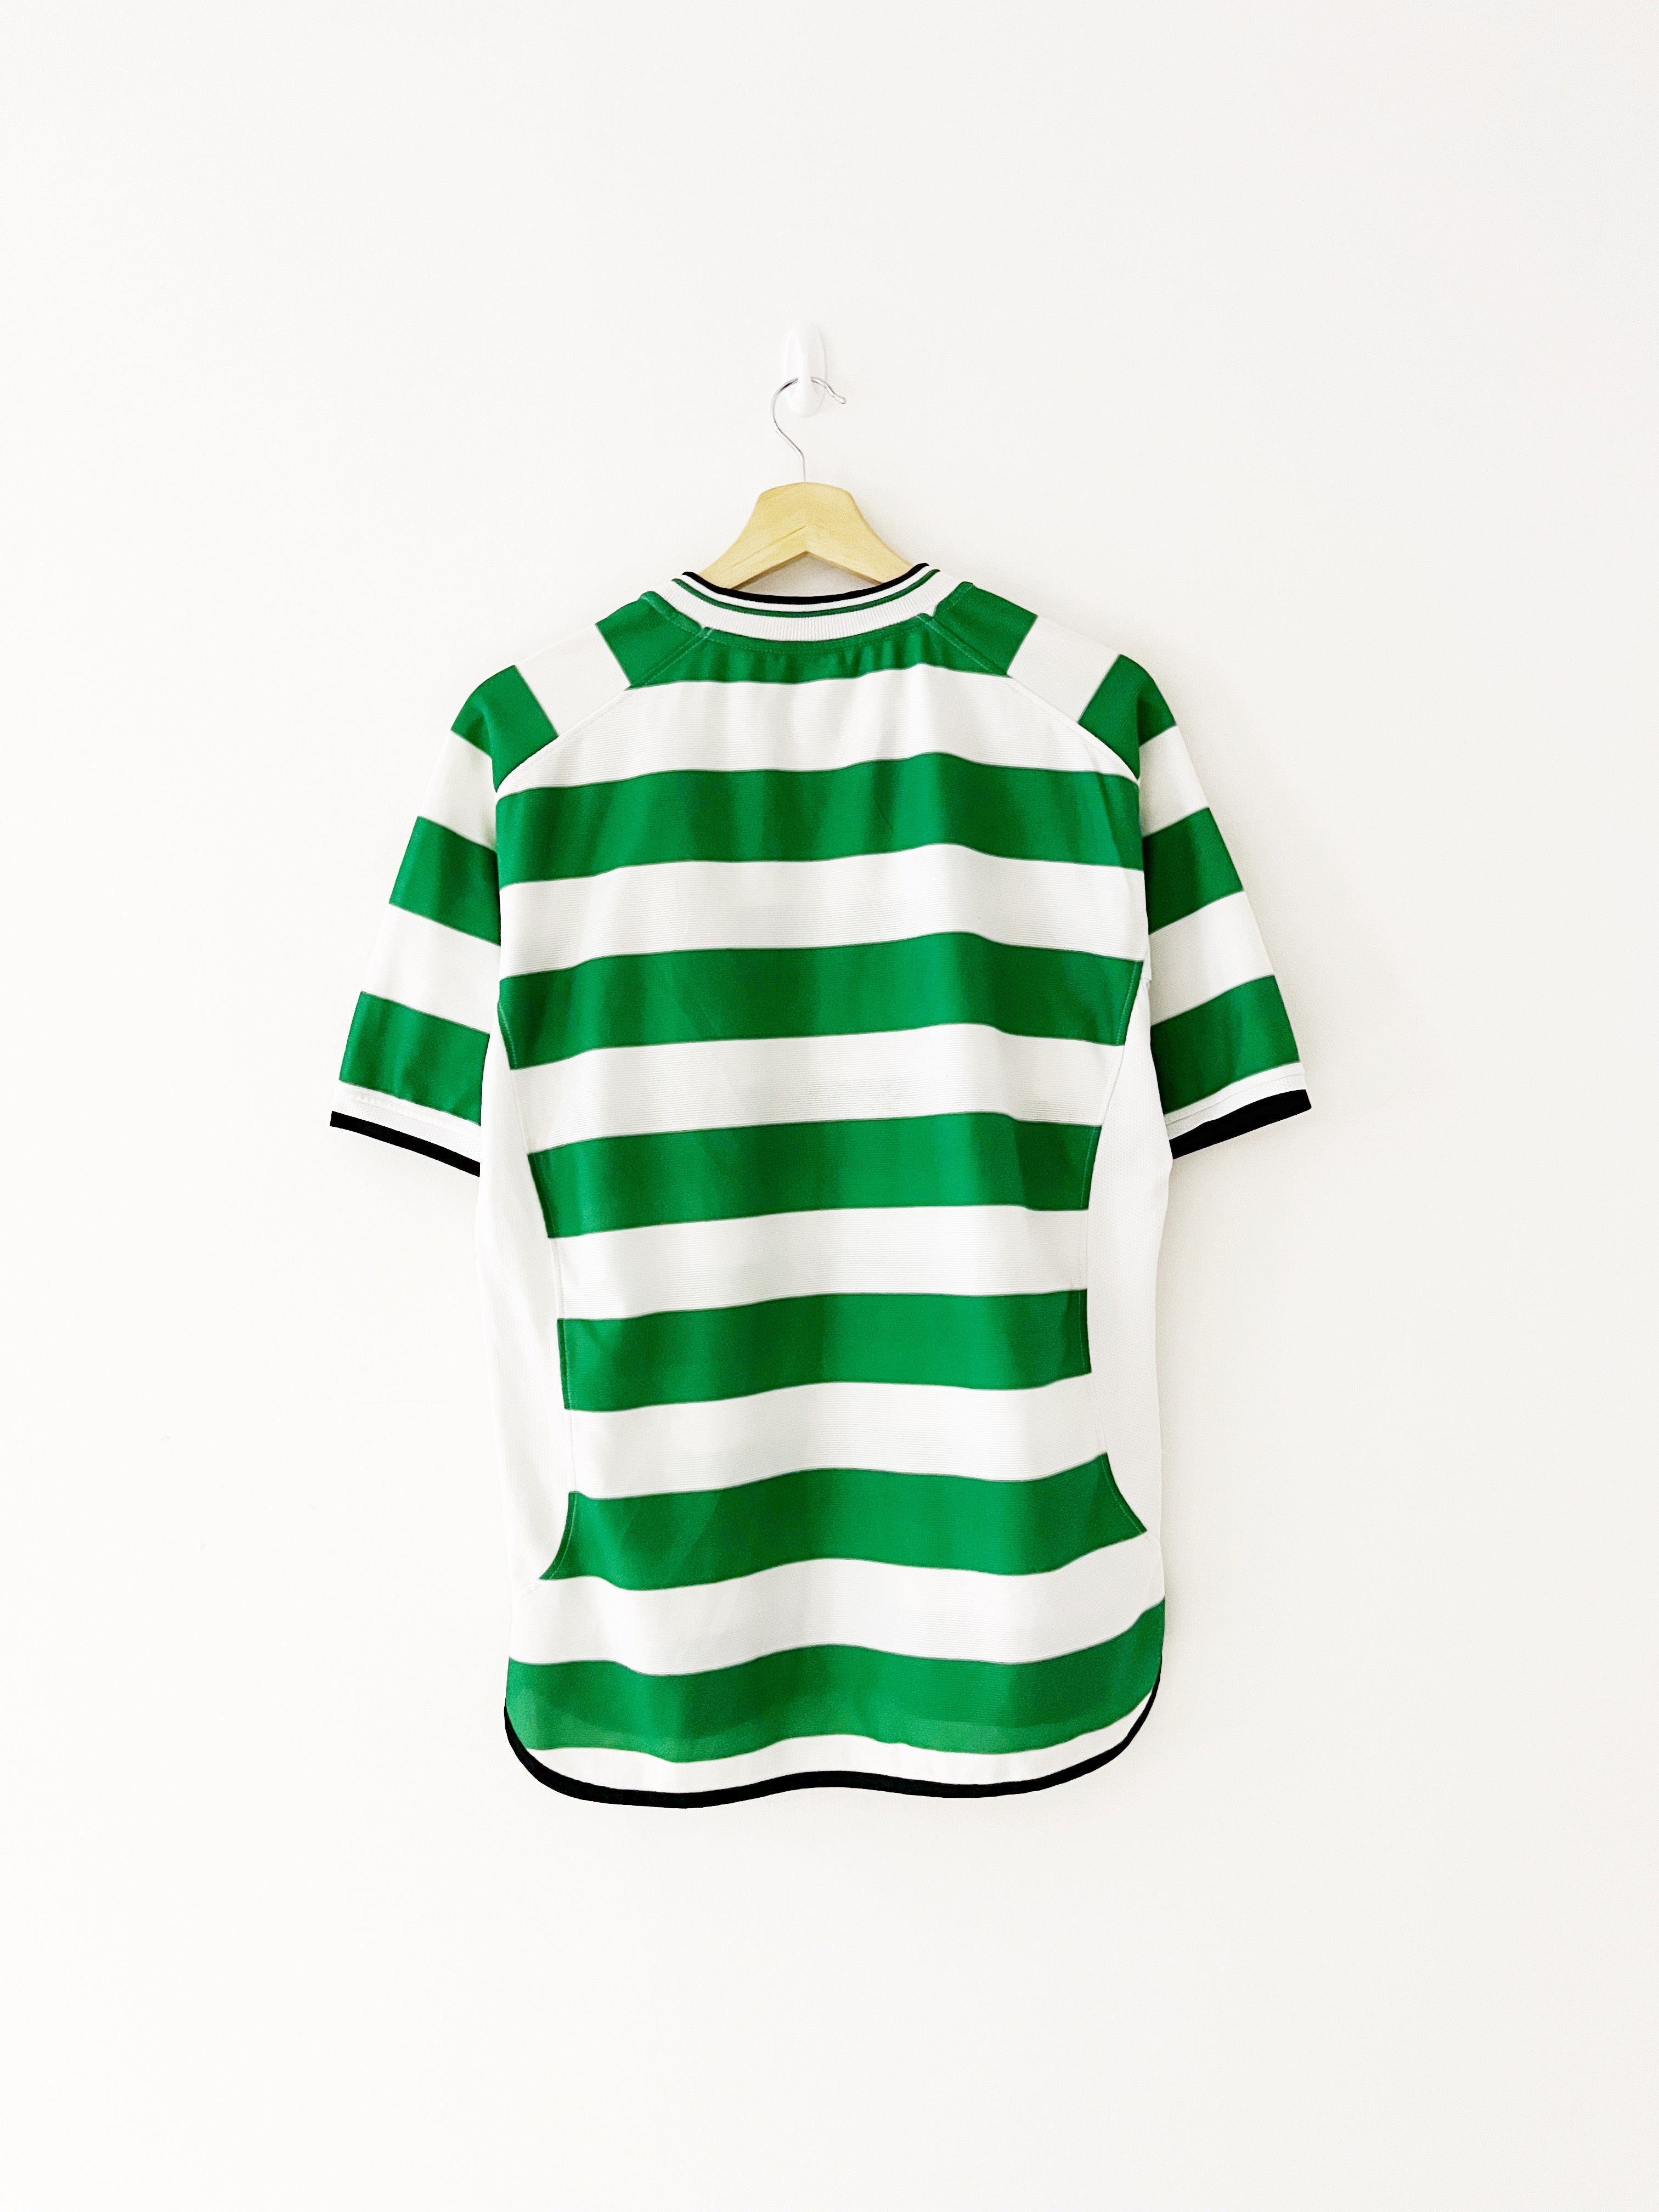 2001/03 Celtic Home Shirt (M) 8/10